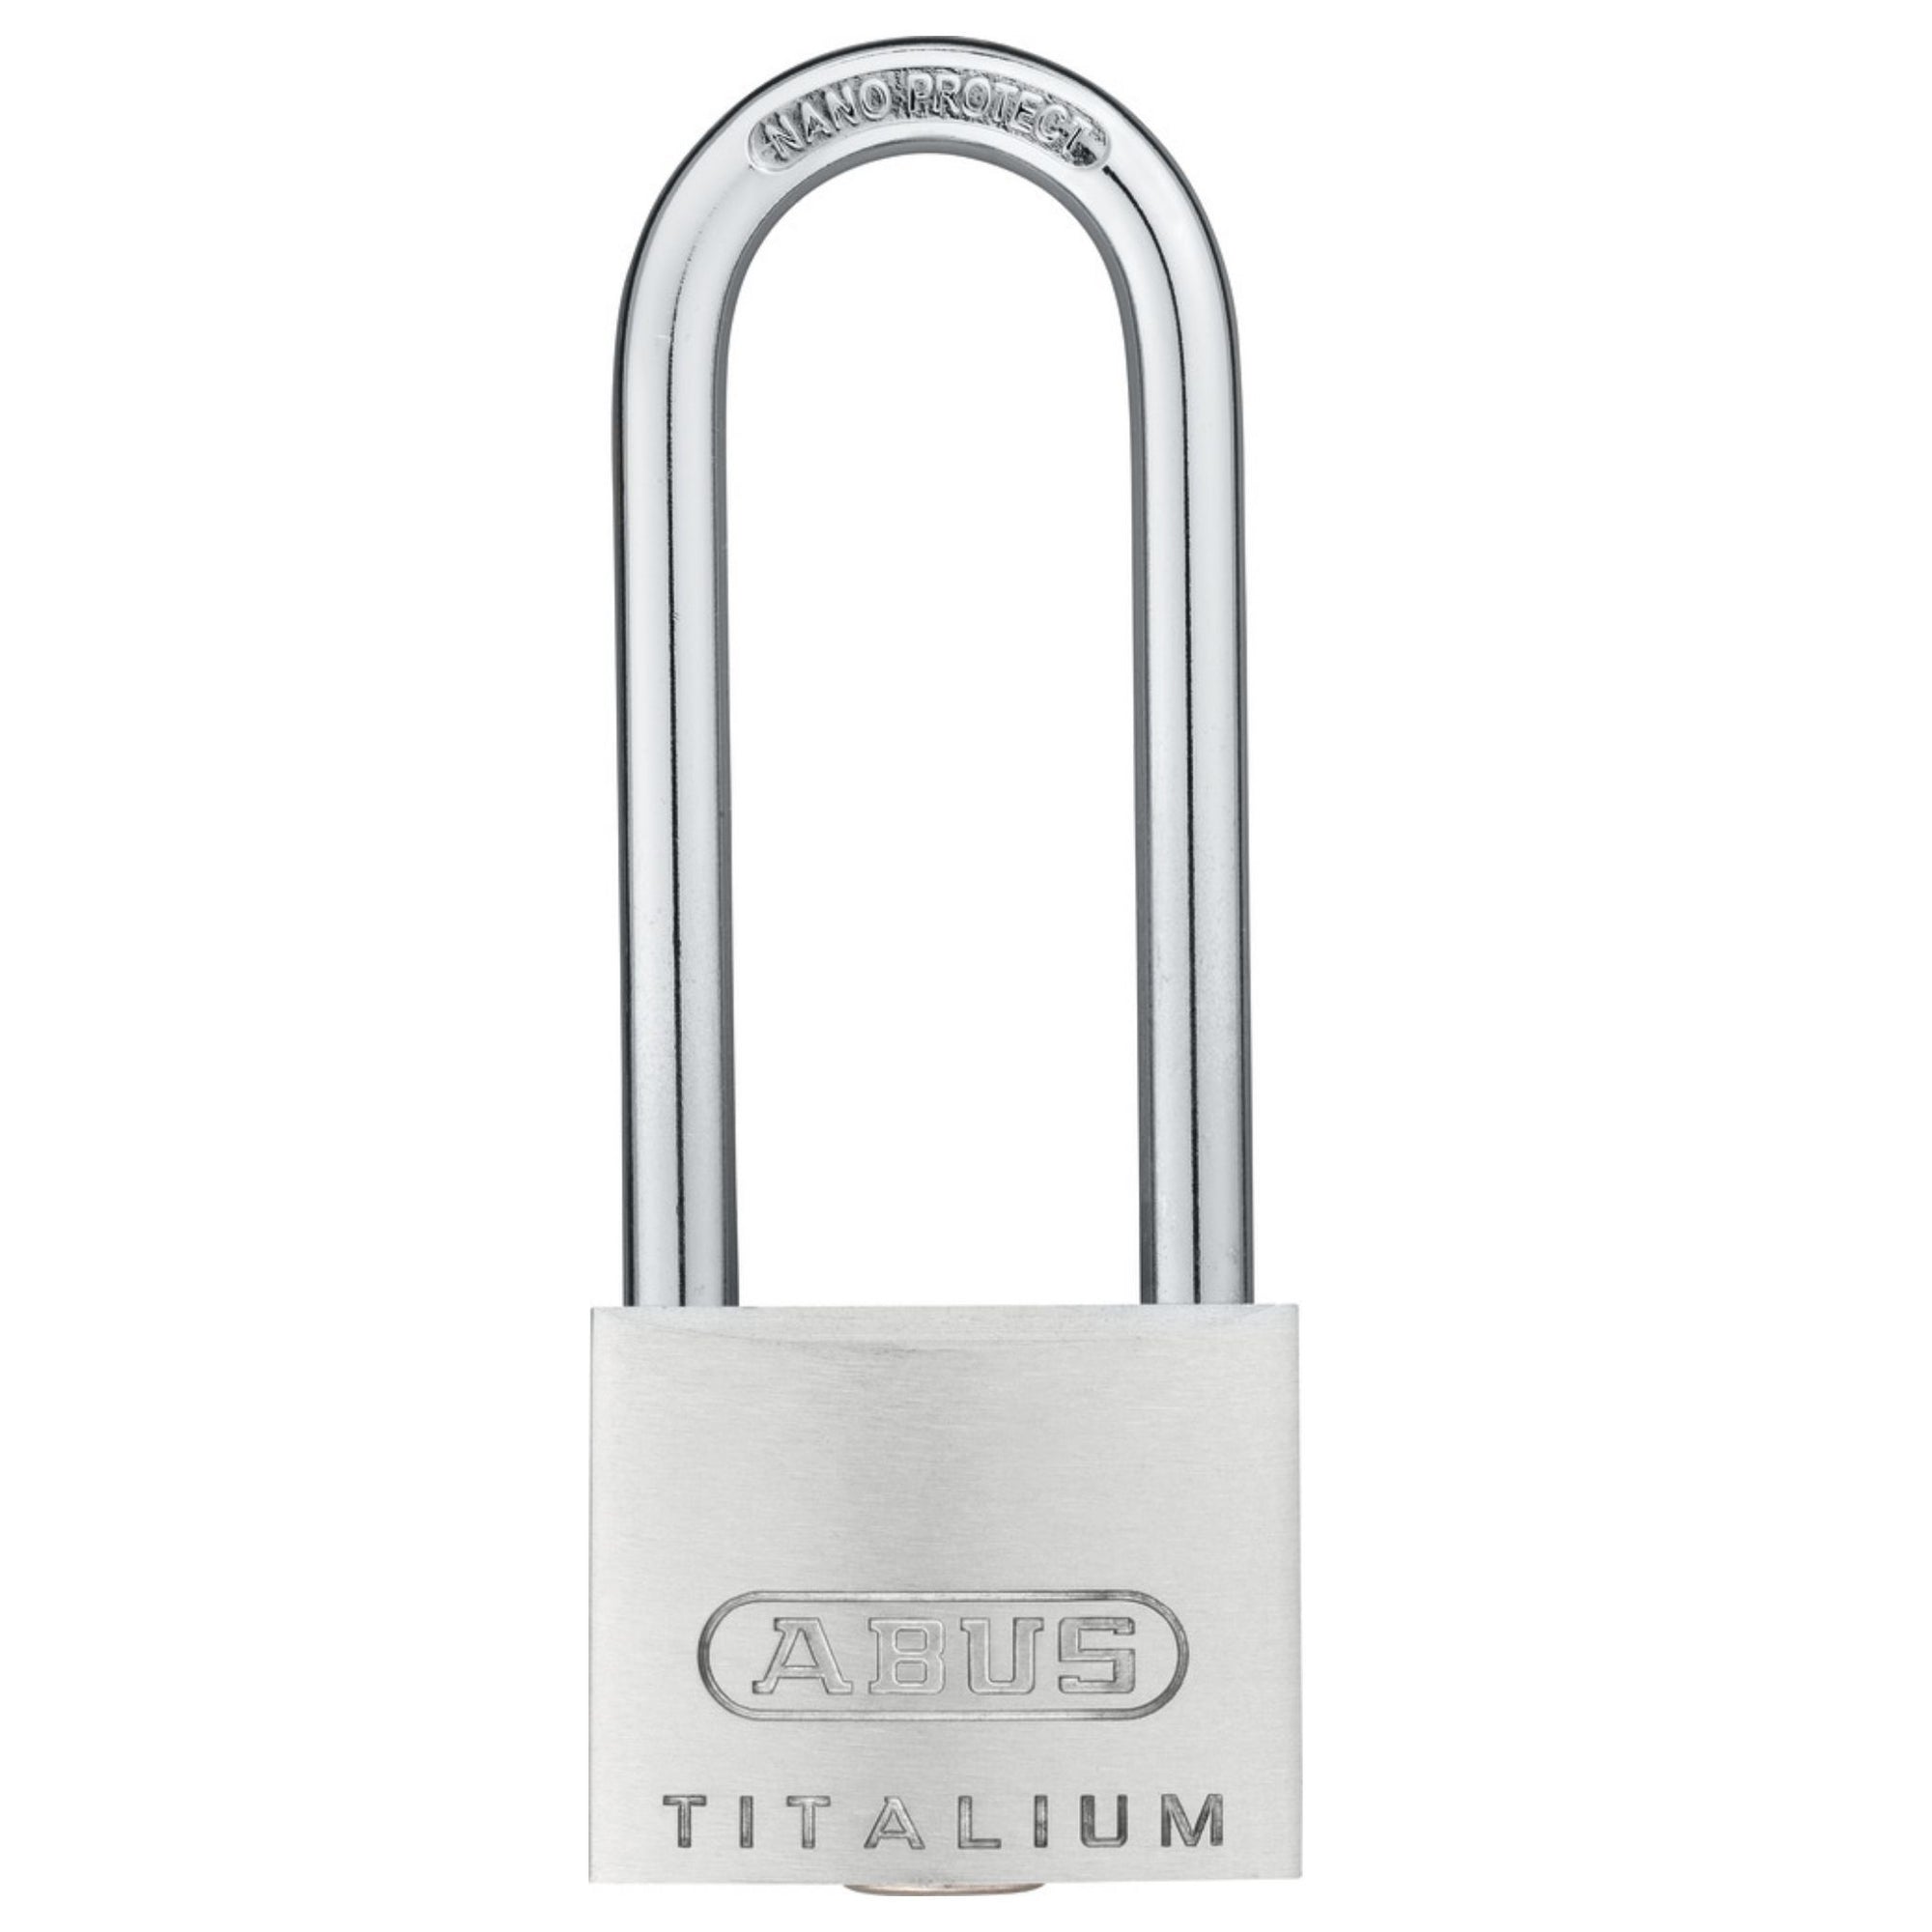 Abus 64TI/40HB63 KA 6411 Titalium Padlocks with 2-31/64" Shackle Keyed Alike to Match Key Number KA6411 - The Lock Source